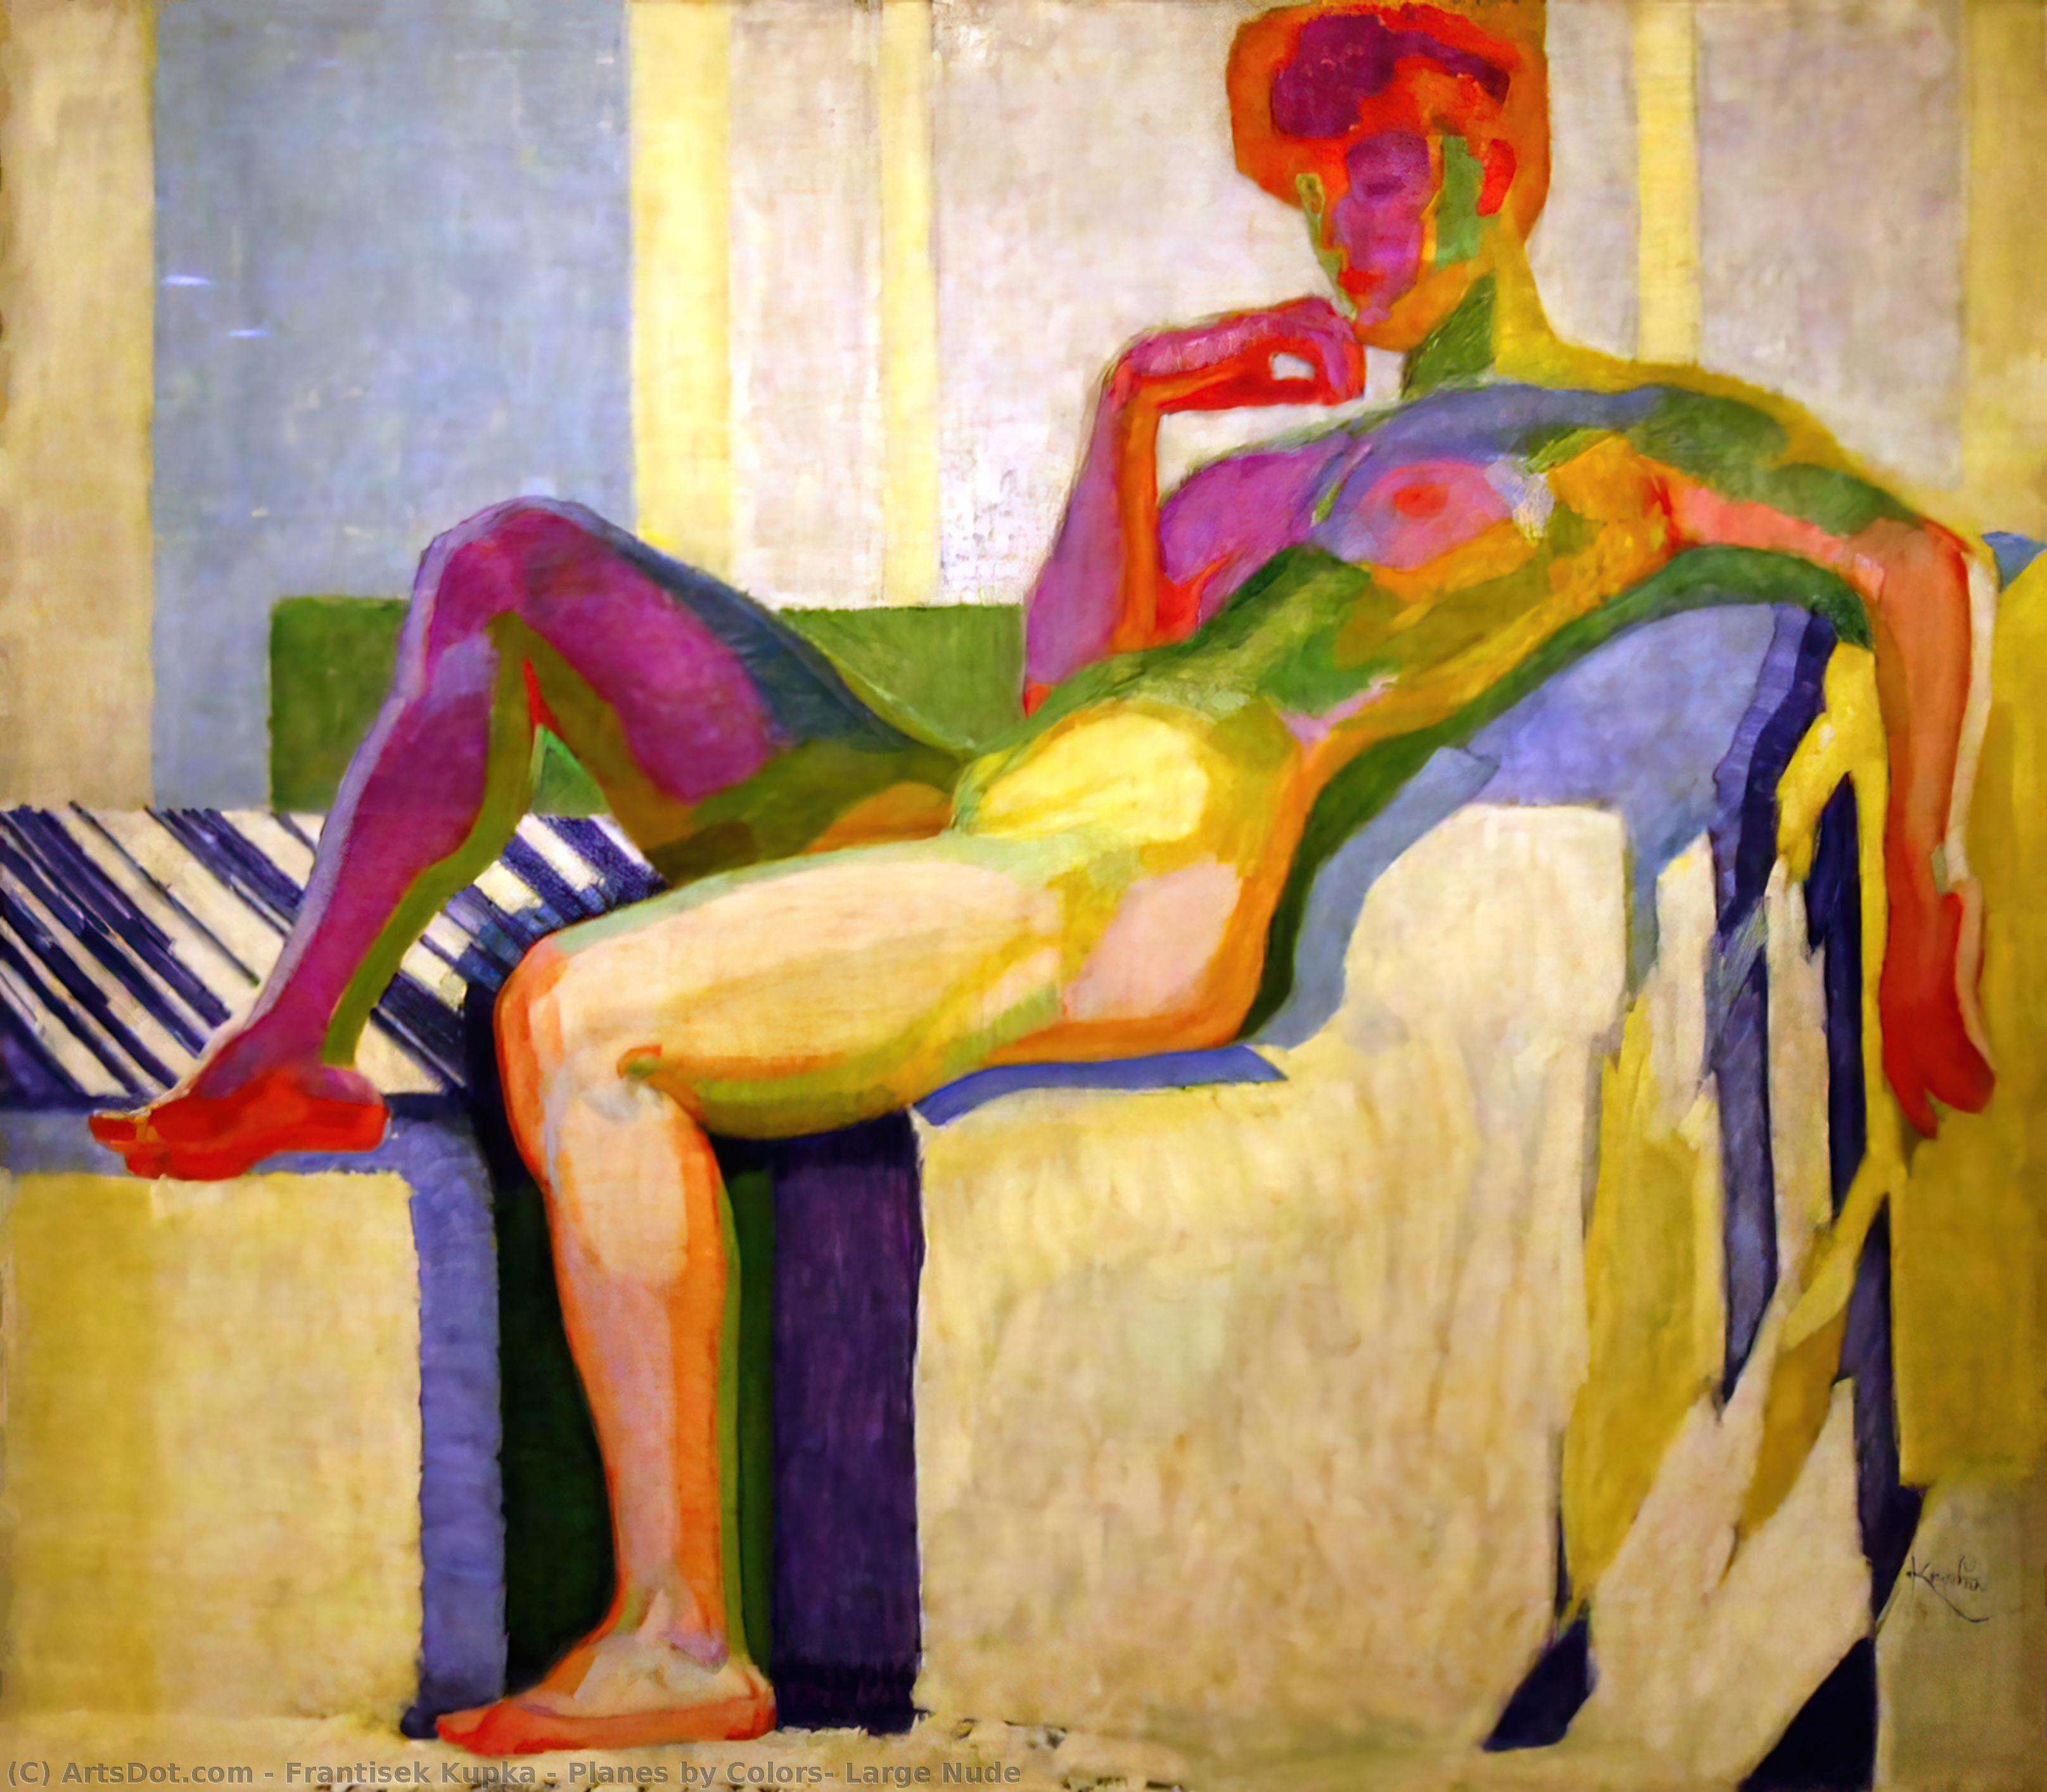 WikiOO.org - Encyclopedia of Fine Arts - Festés, Grafika Frantisek Kupka - Planes by Colors, Large Nude